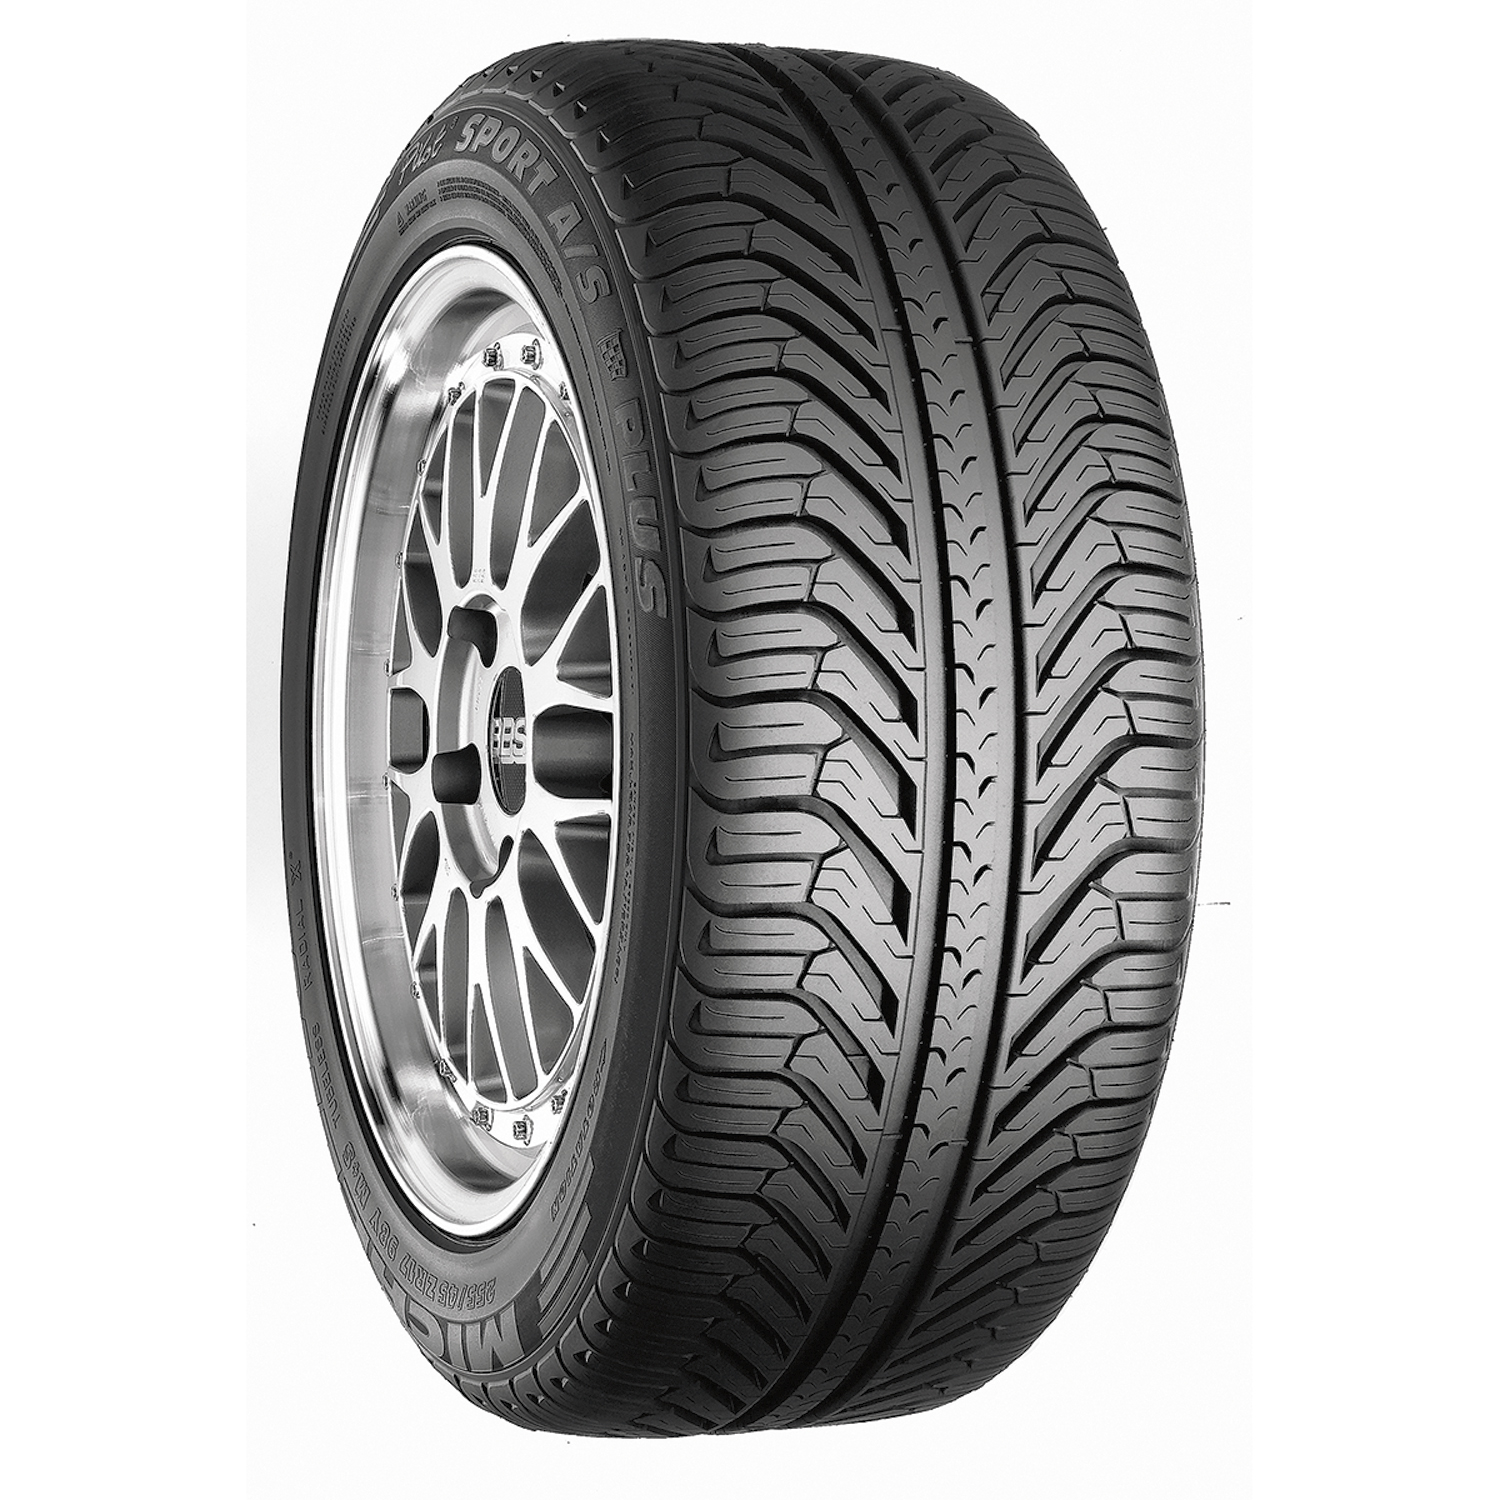 Michelin Pilot Sport A/S Plus - 275/35ZR18 95Y - All Season Tire